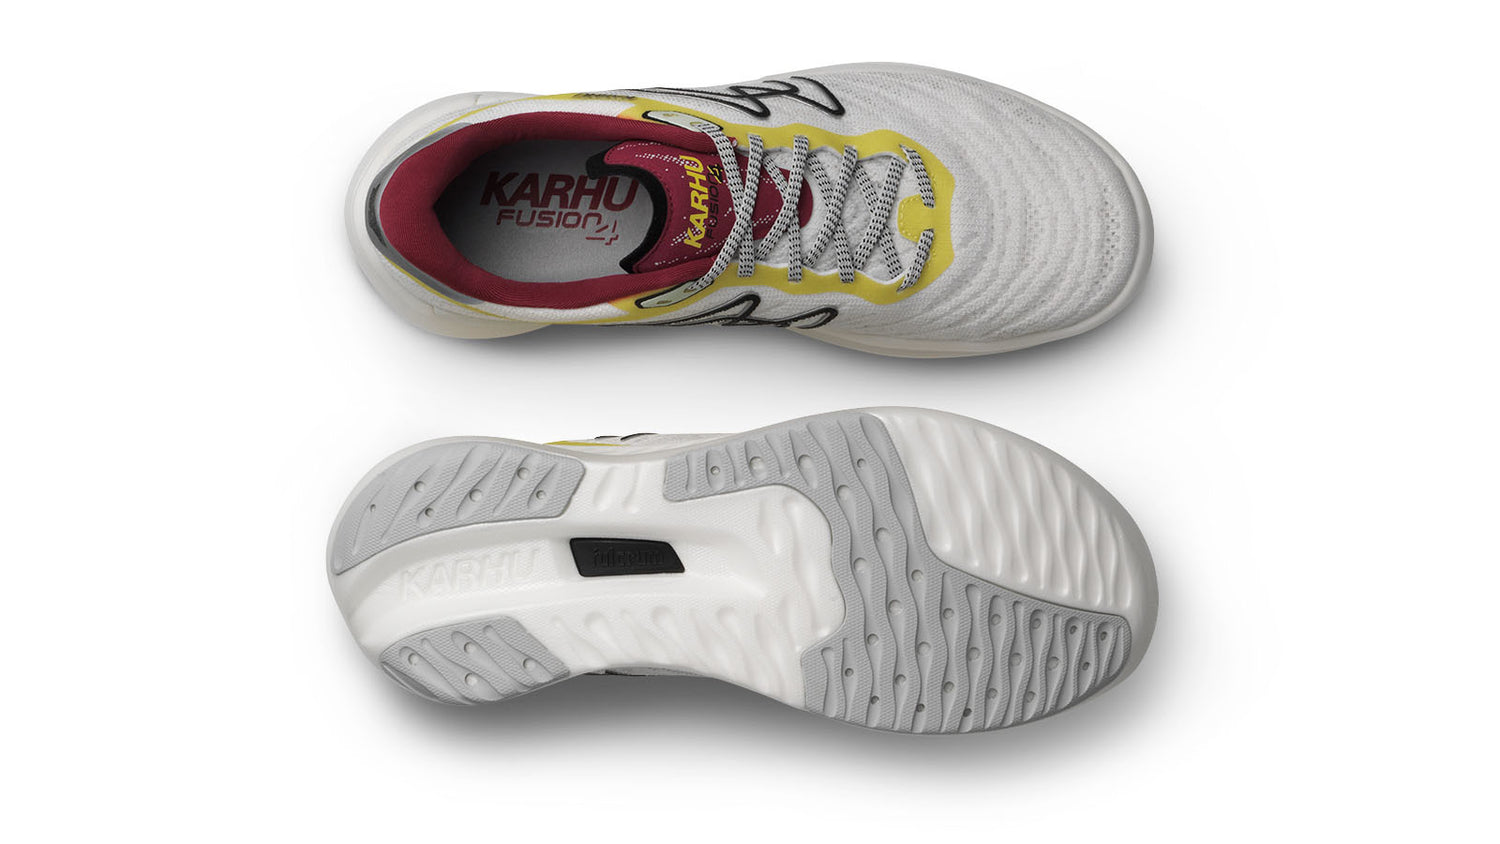 Women's KARHU Fusion 4.0 neutral running shoes – Karhu US